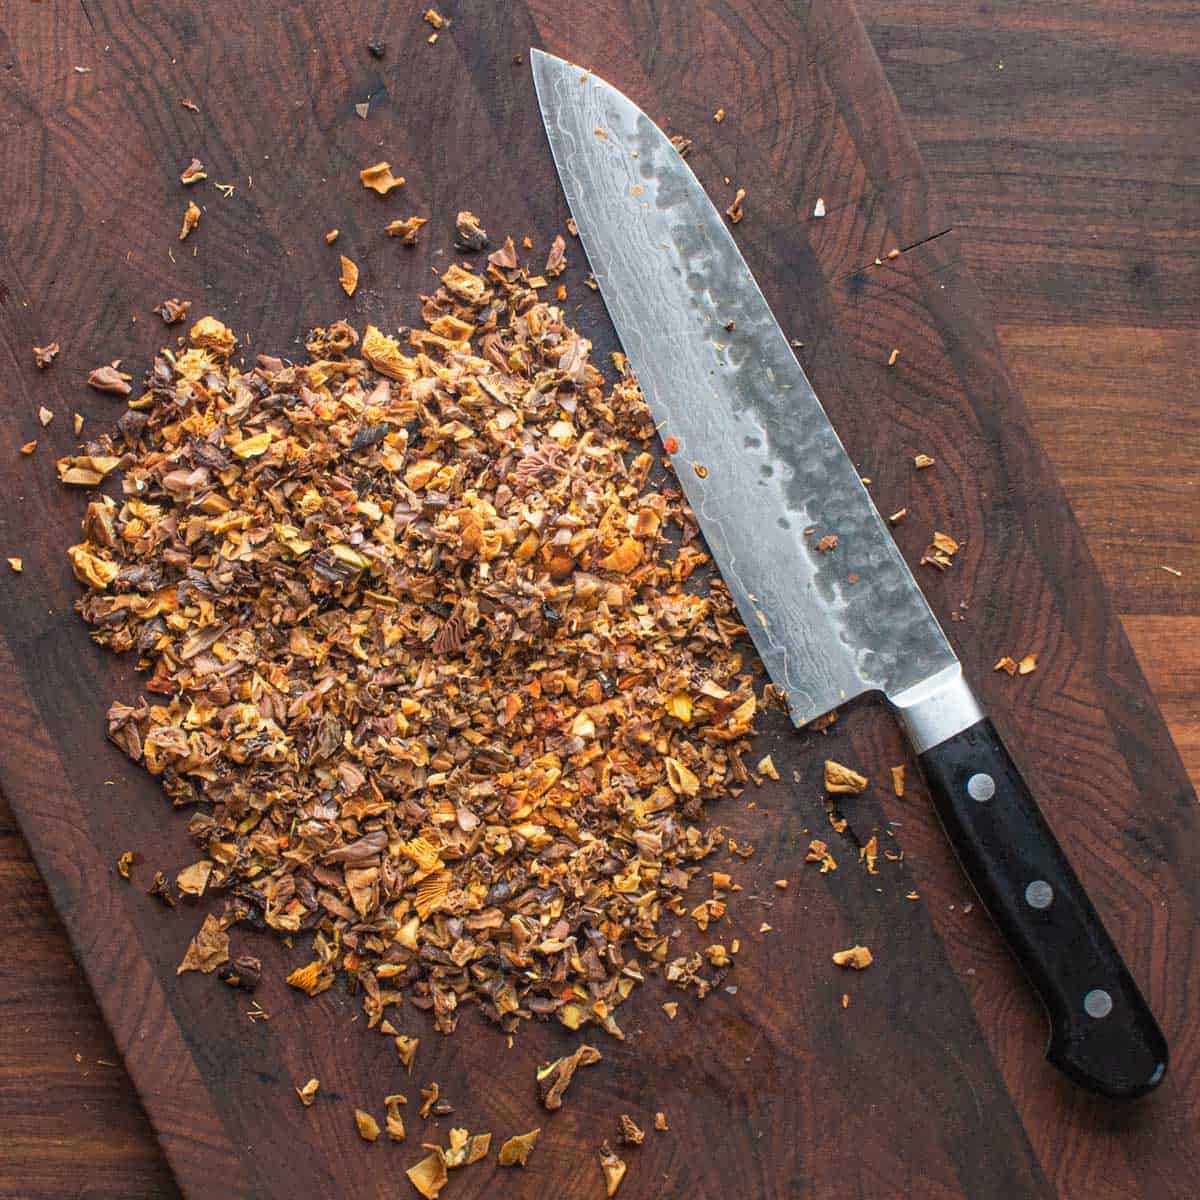 chopping dried mushrooms on a cutting board